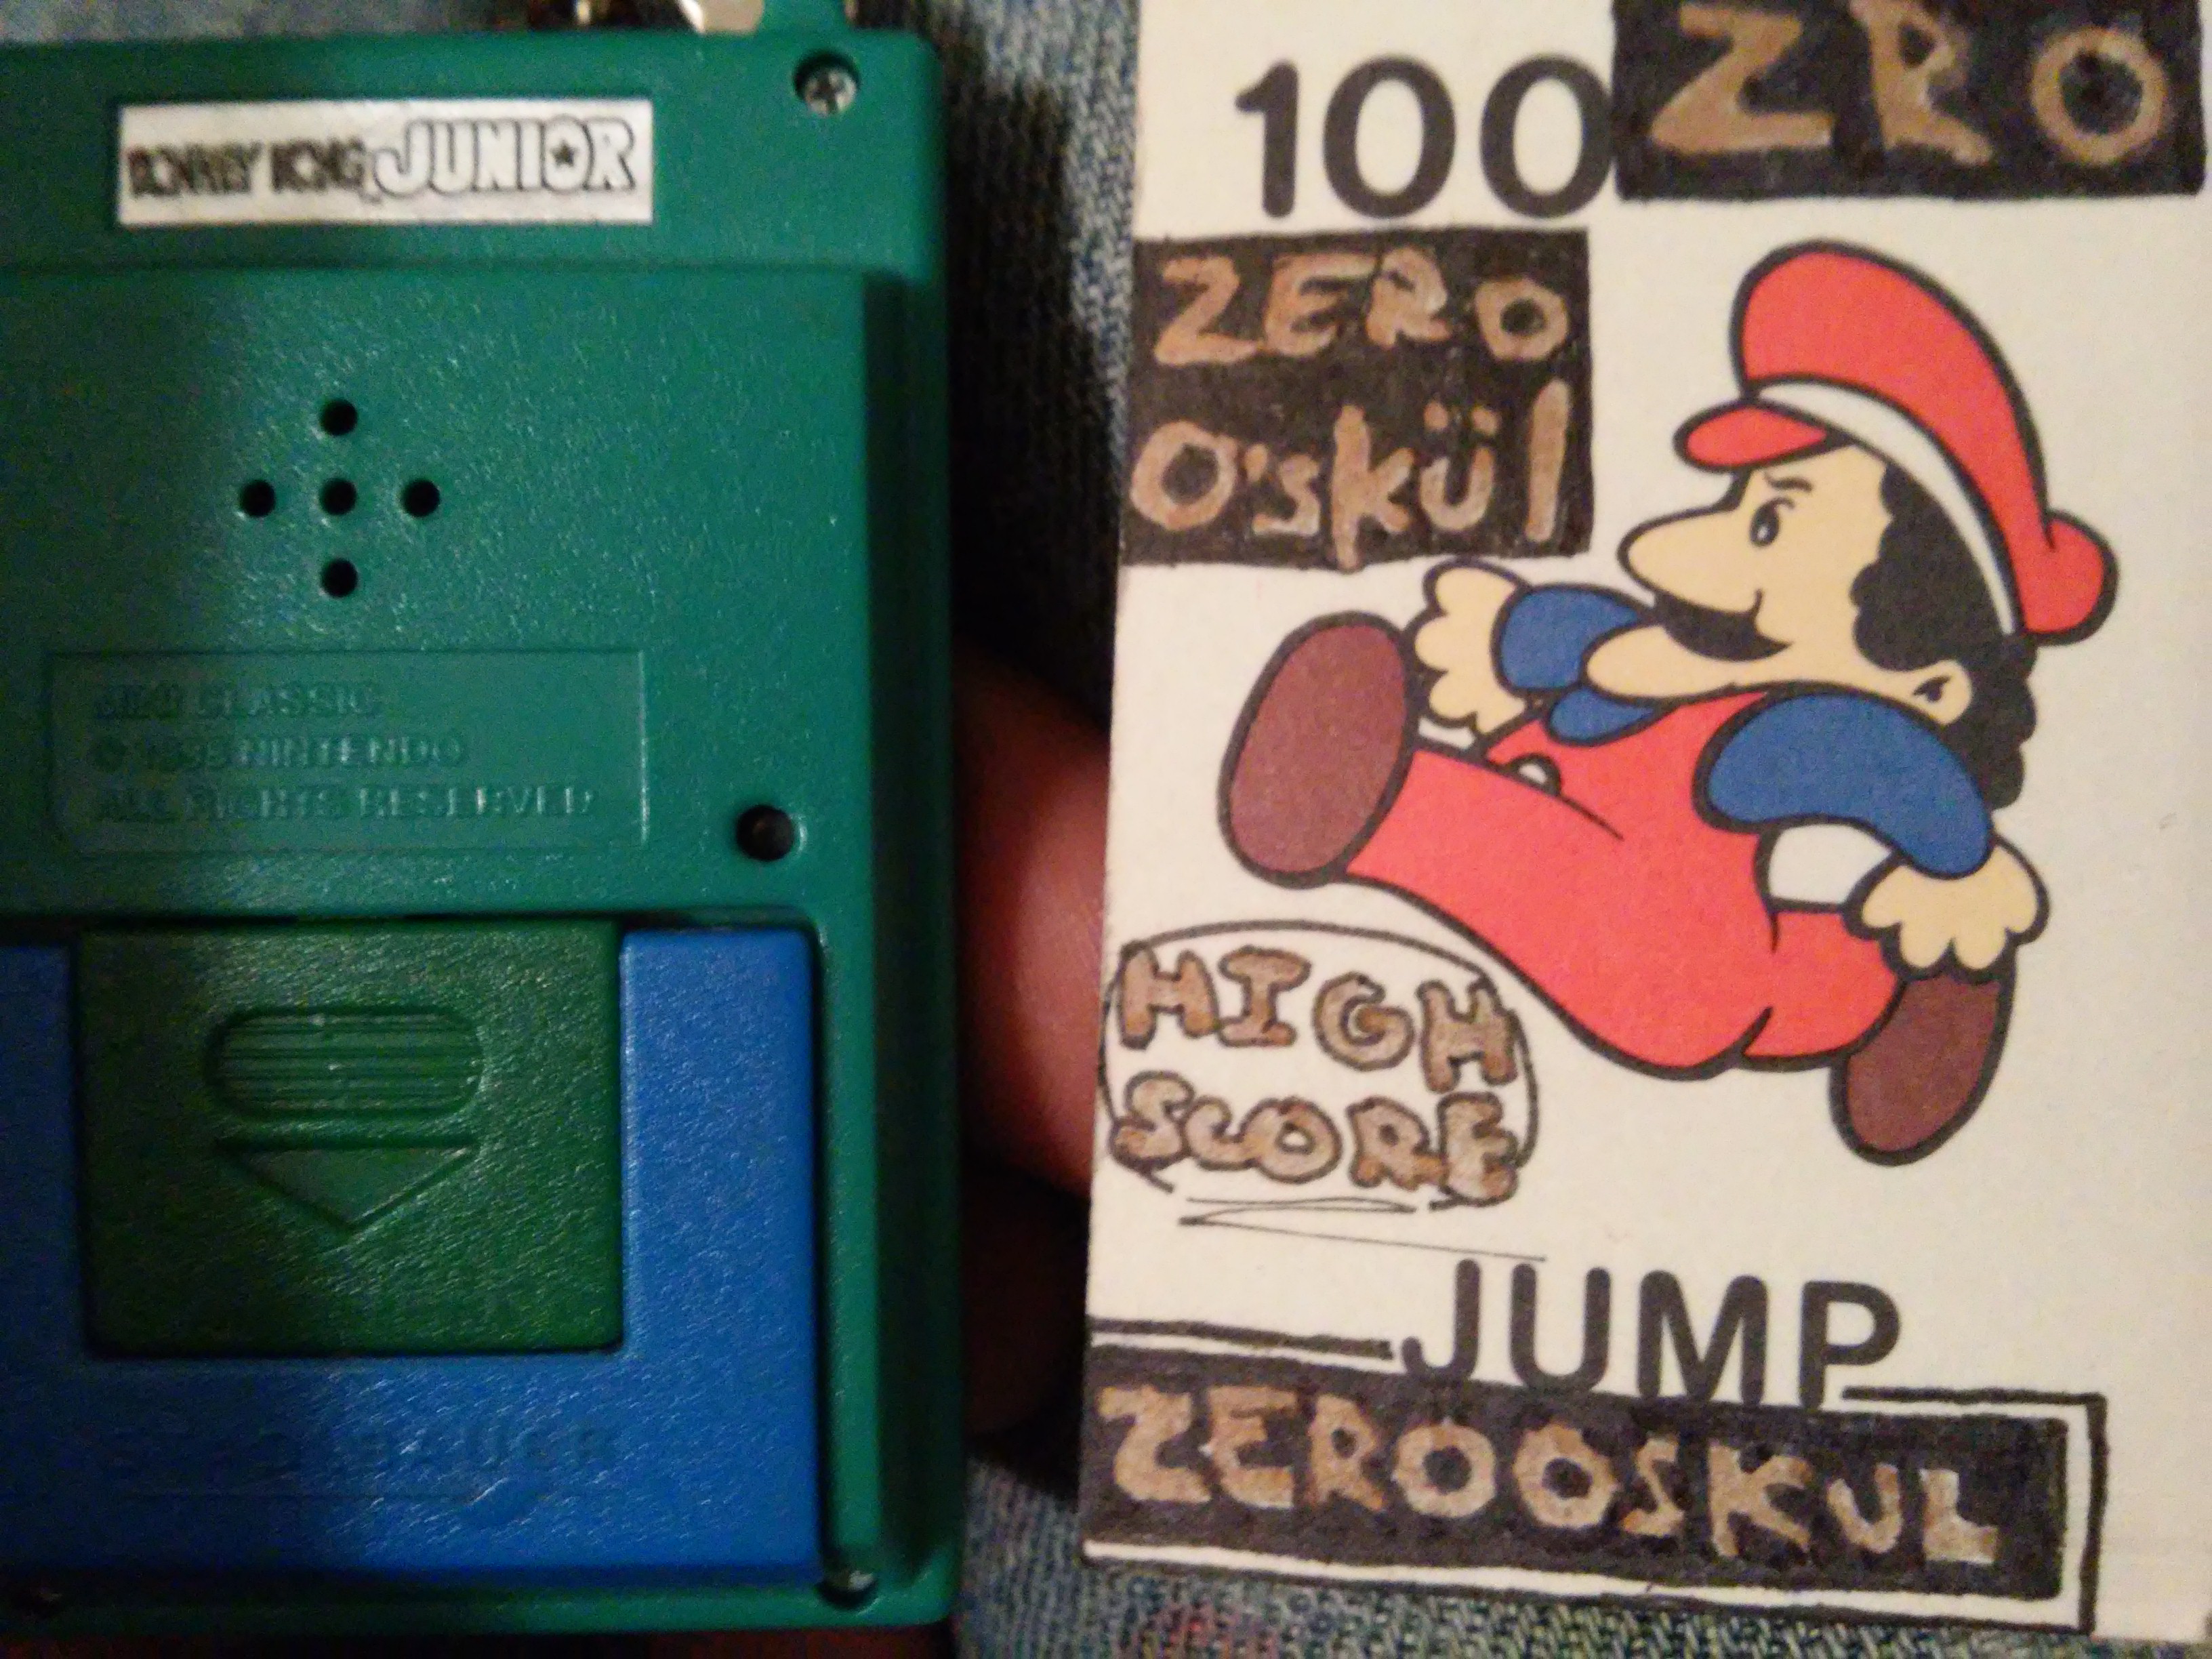 zerooskul: Nintendo Mini Classics: Donkey Kong Junior (Dedicated Handheld) 999 points on 2019-01-03 21:36:31